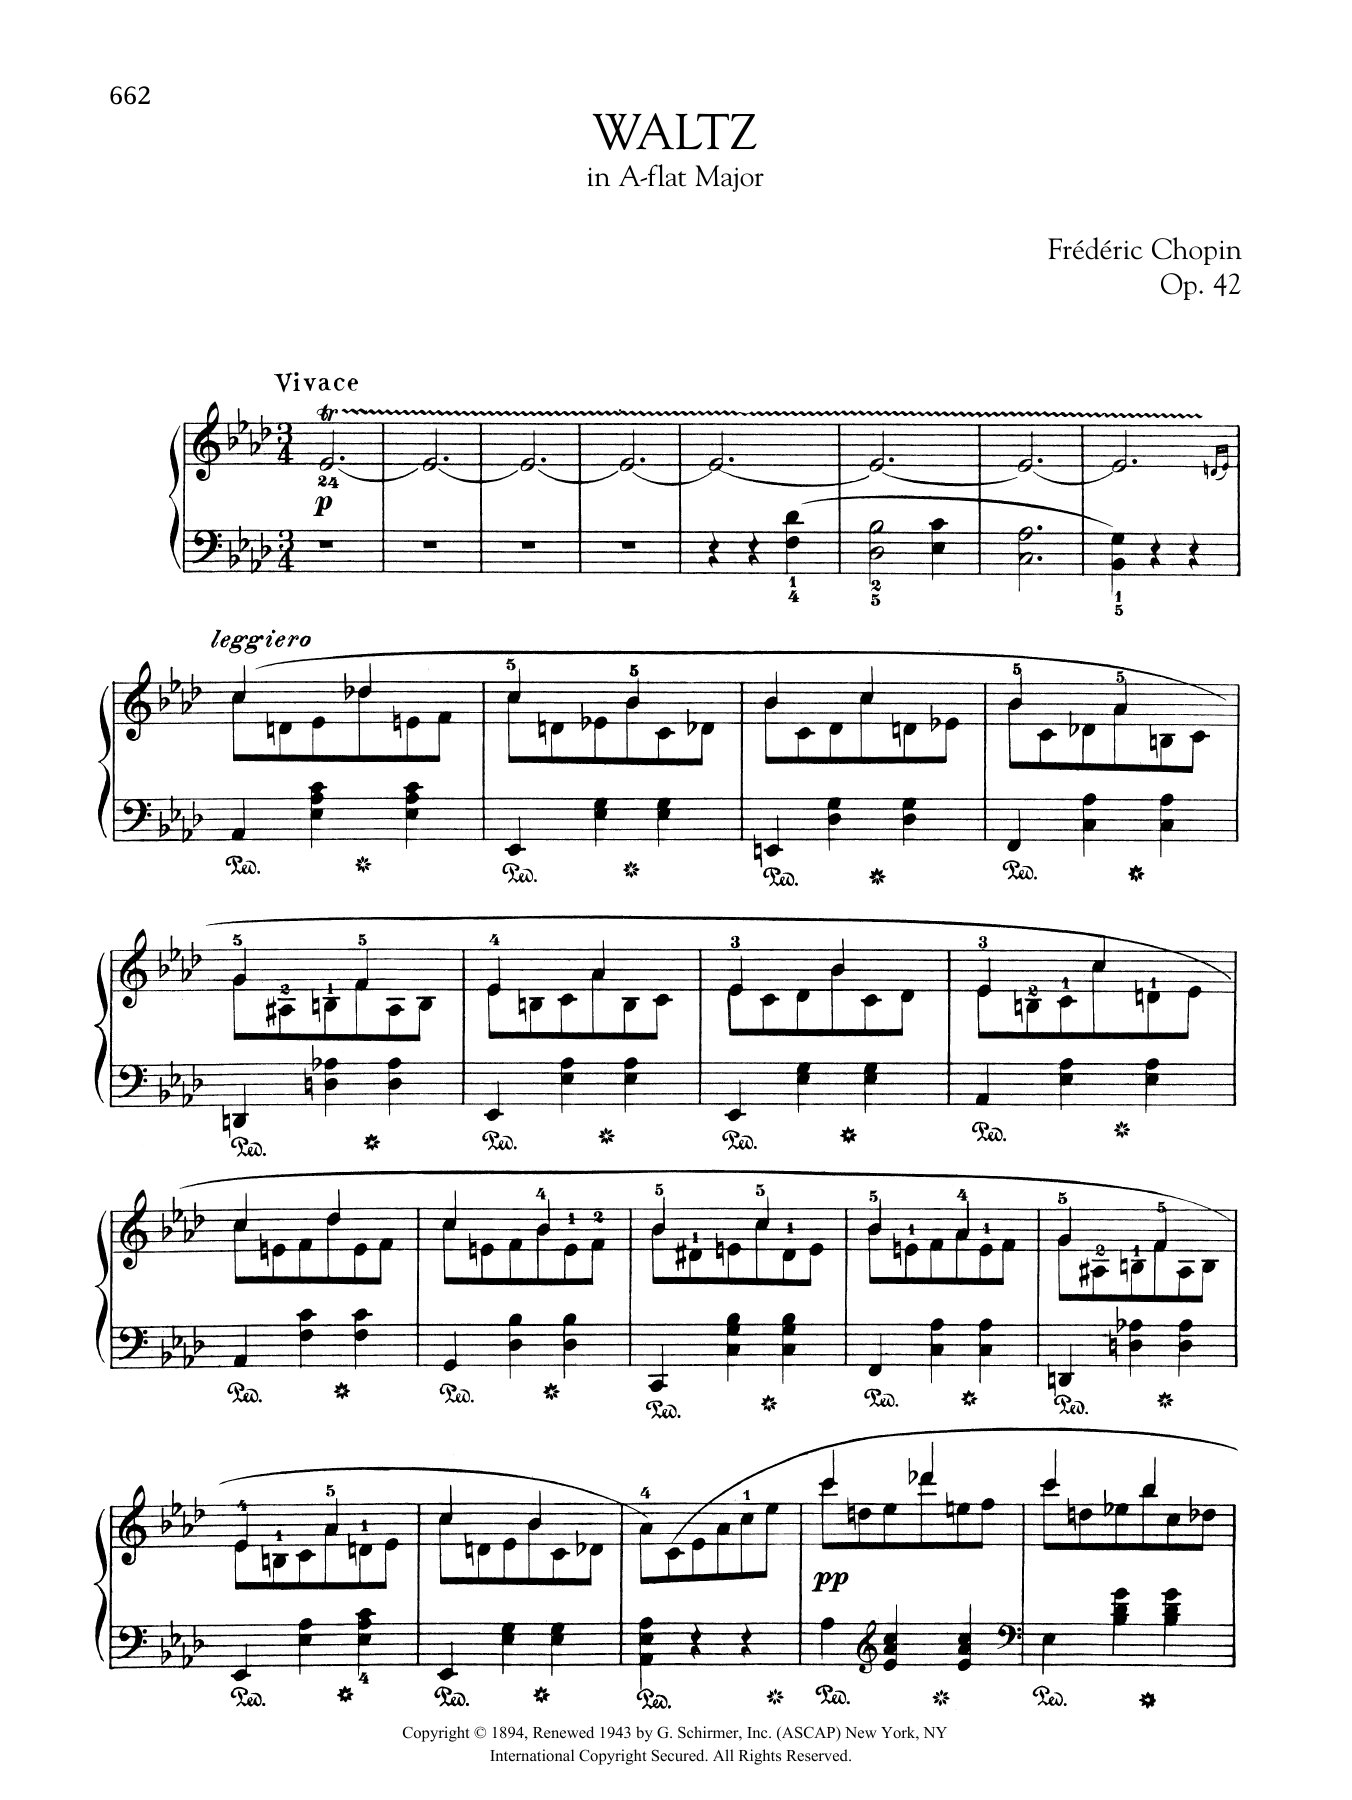 Download Frederic Chopin Waltz in A-flat Major, Op. 42 Sheet Music